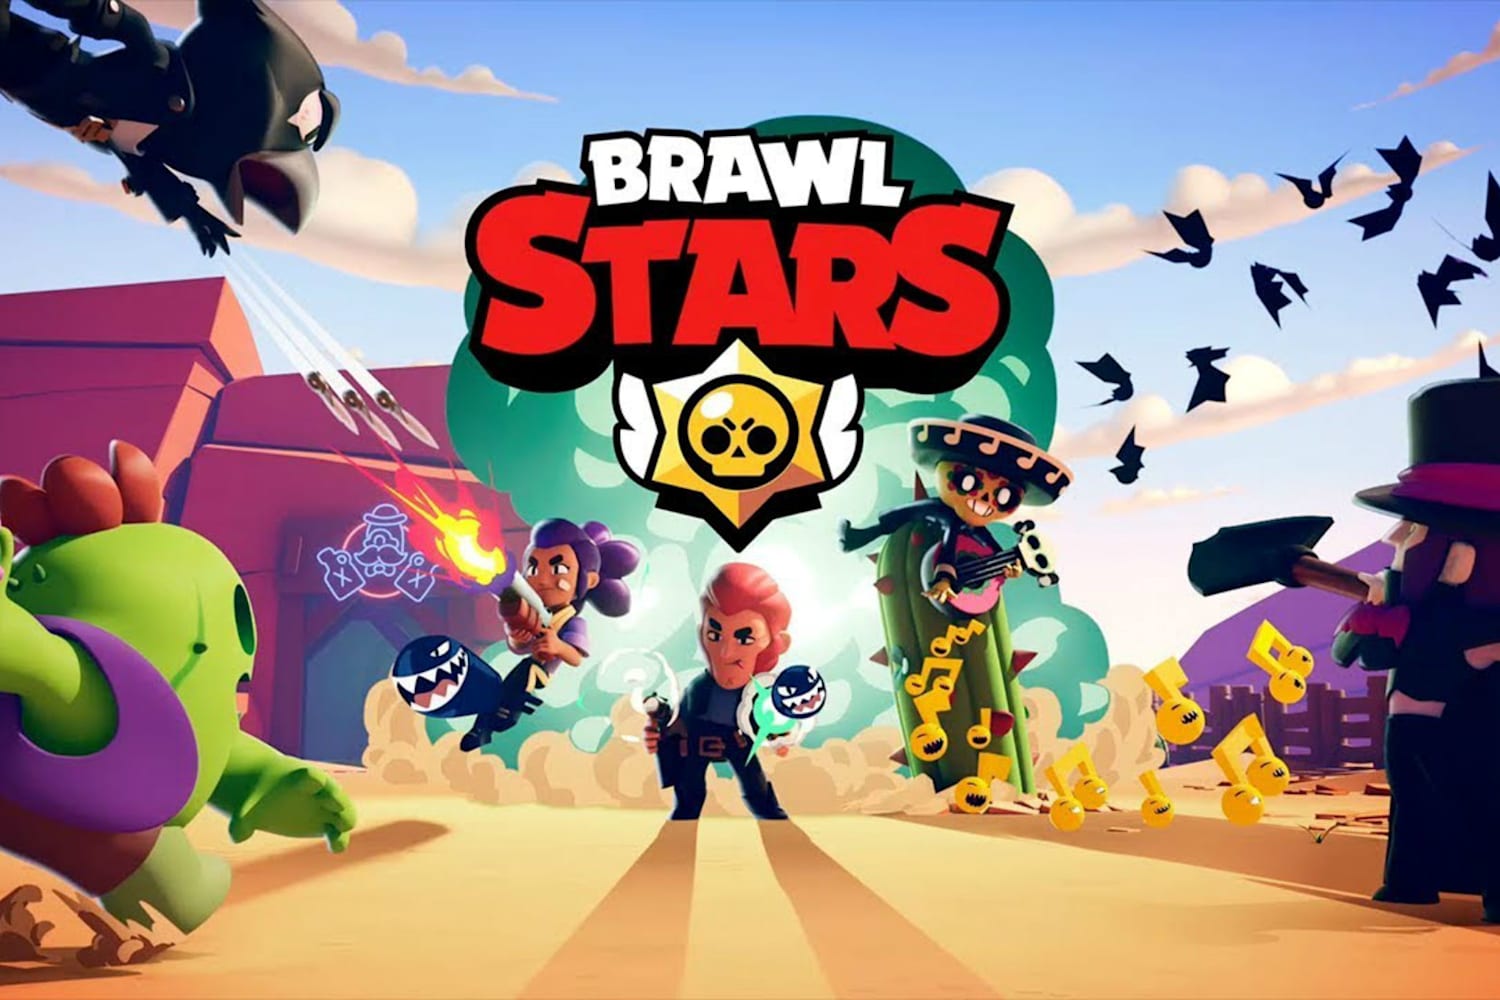 Como Jugar A Brawl Stars Guia De Juego 2020 - brawl stars dibujos animados